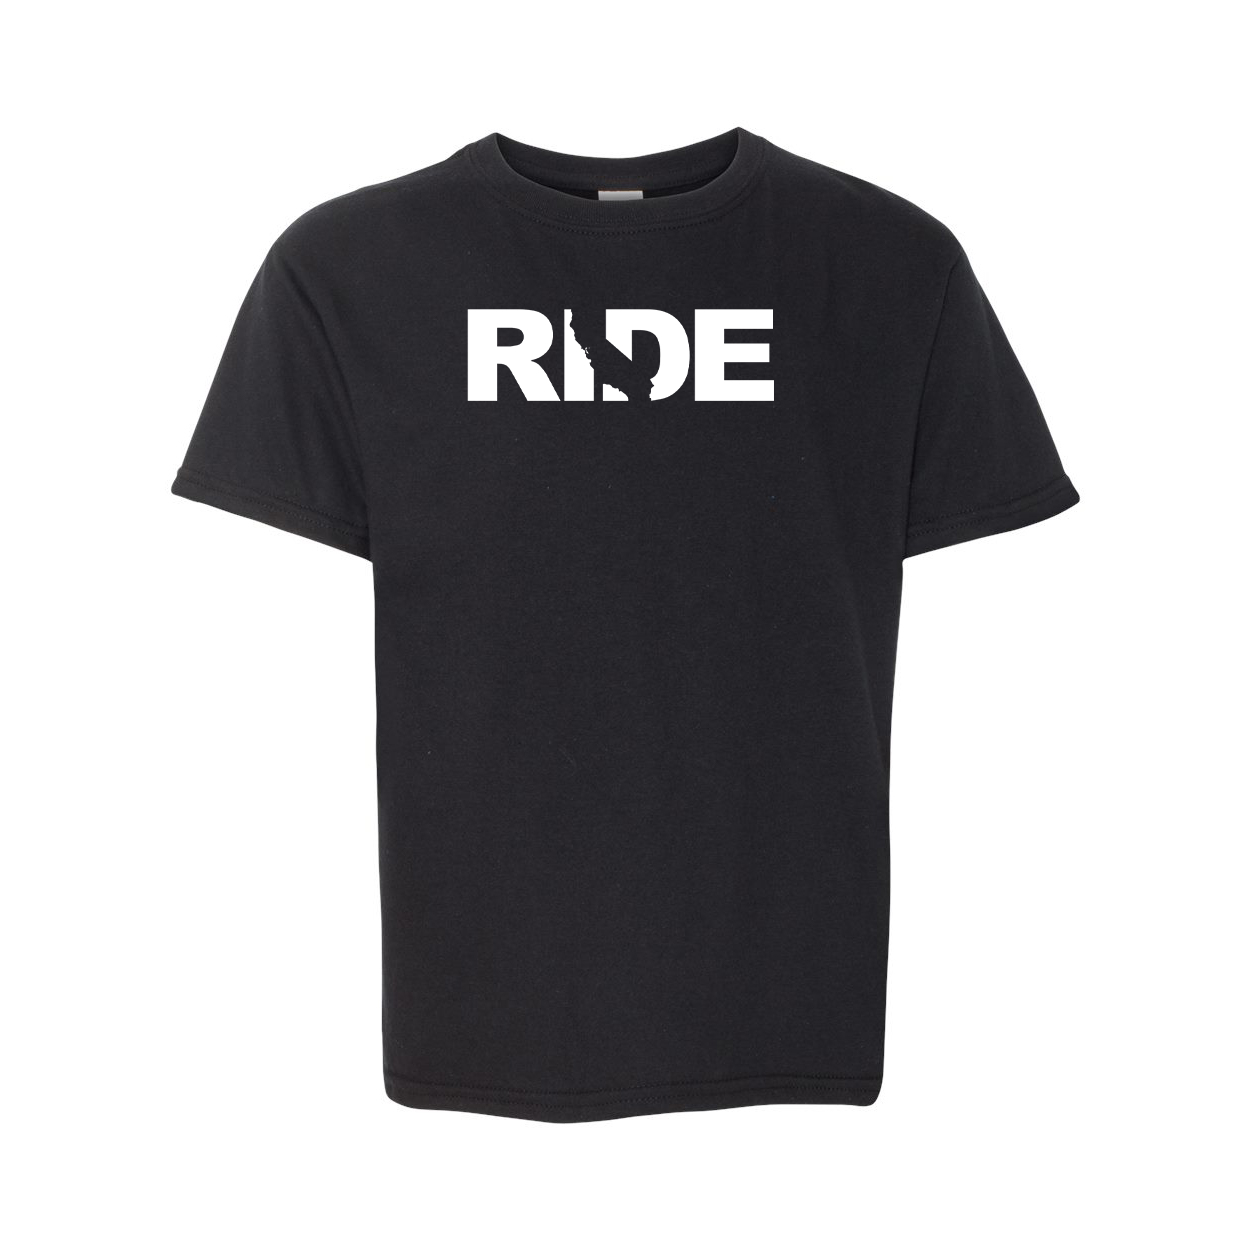 Ride California Classic Youth T-Shirt Black (White Logo)